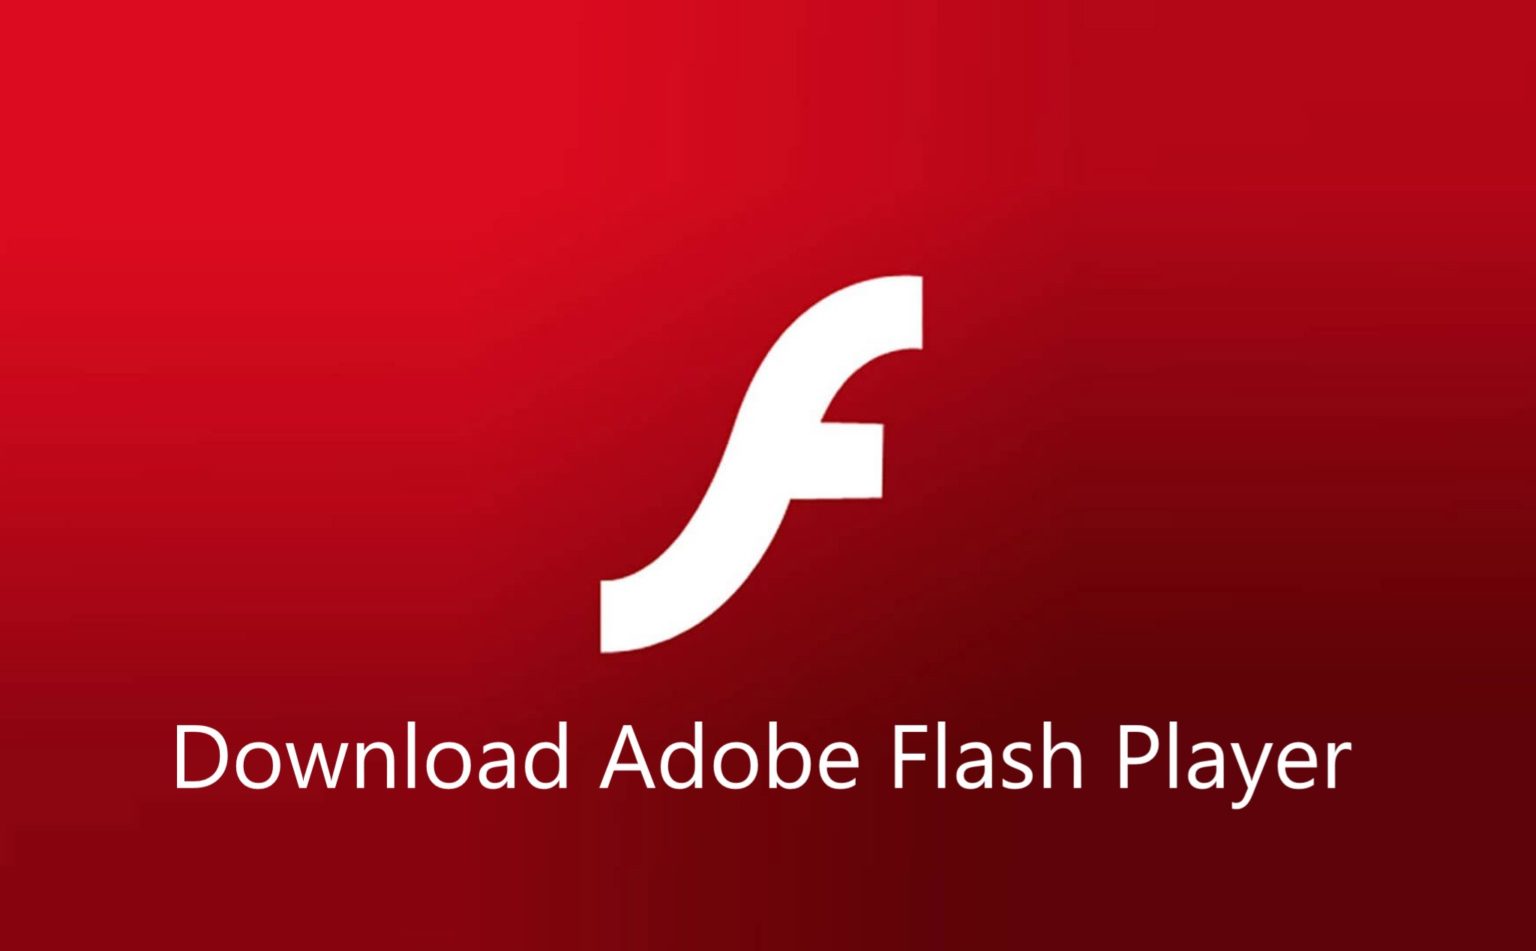 adobe flash player free download windows 8.1 64 bit